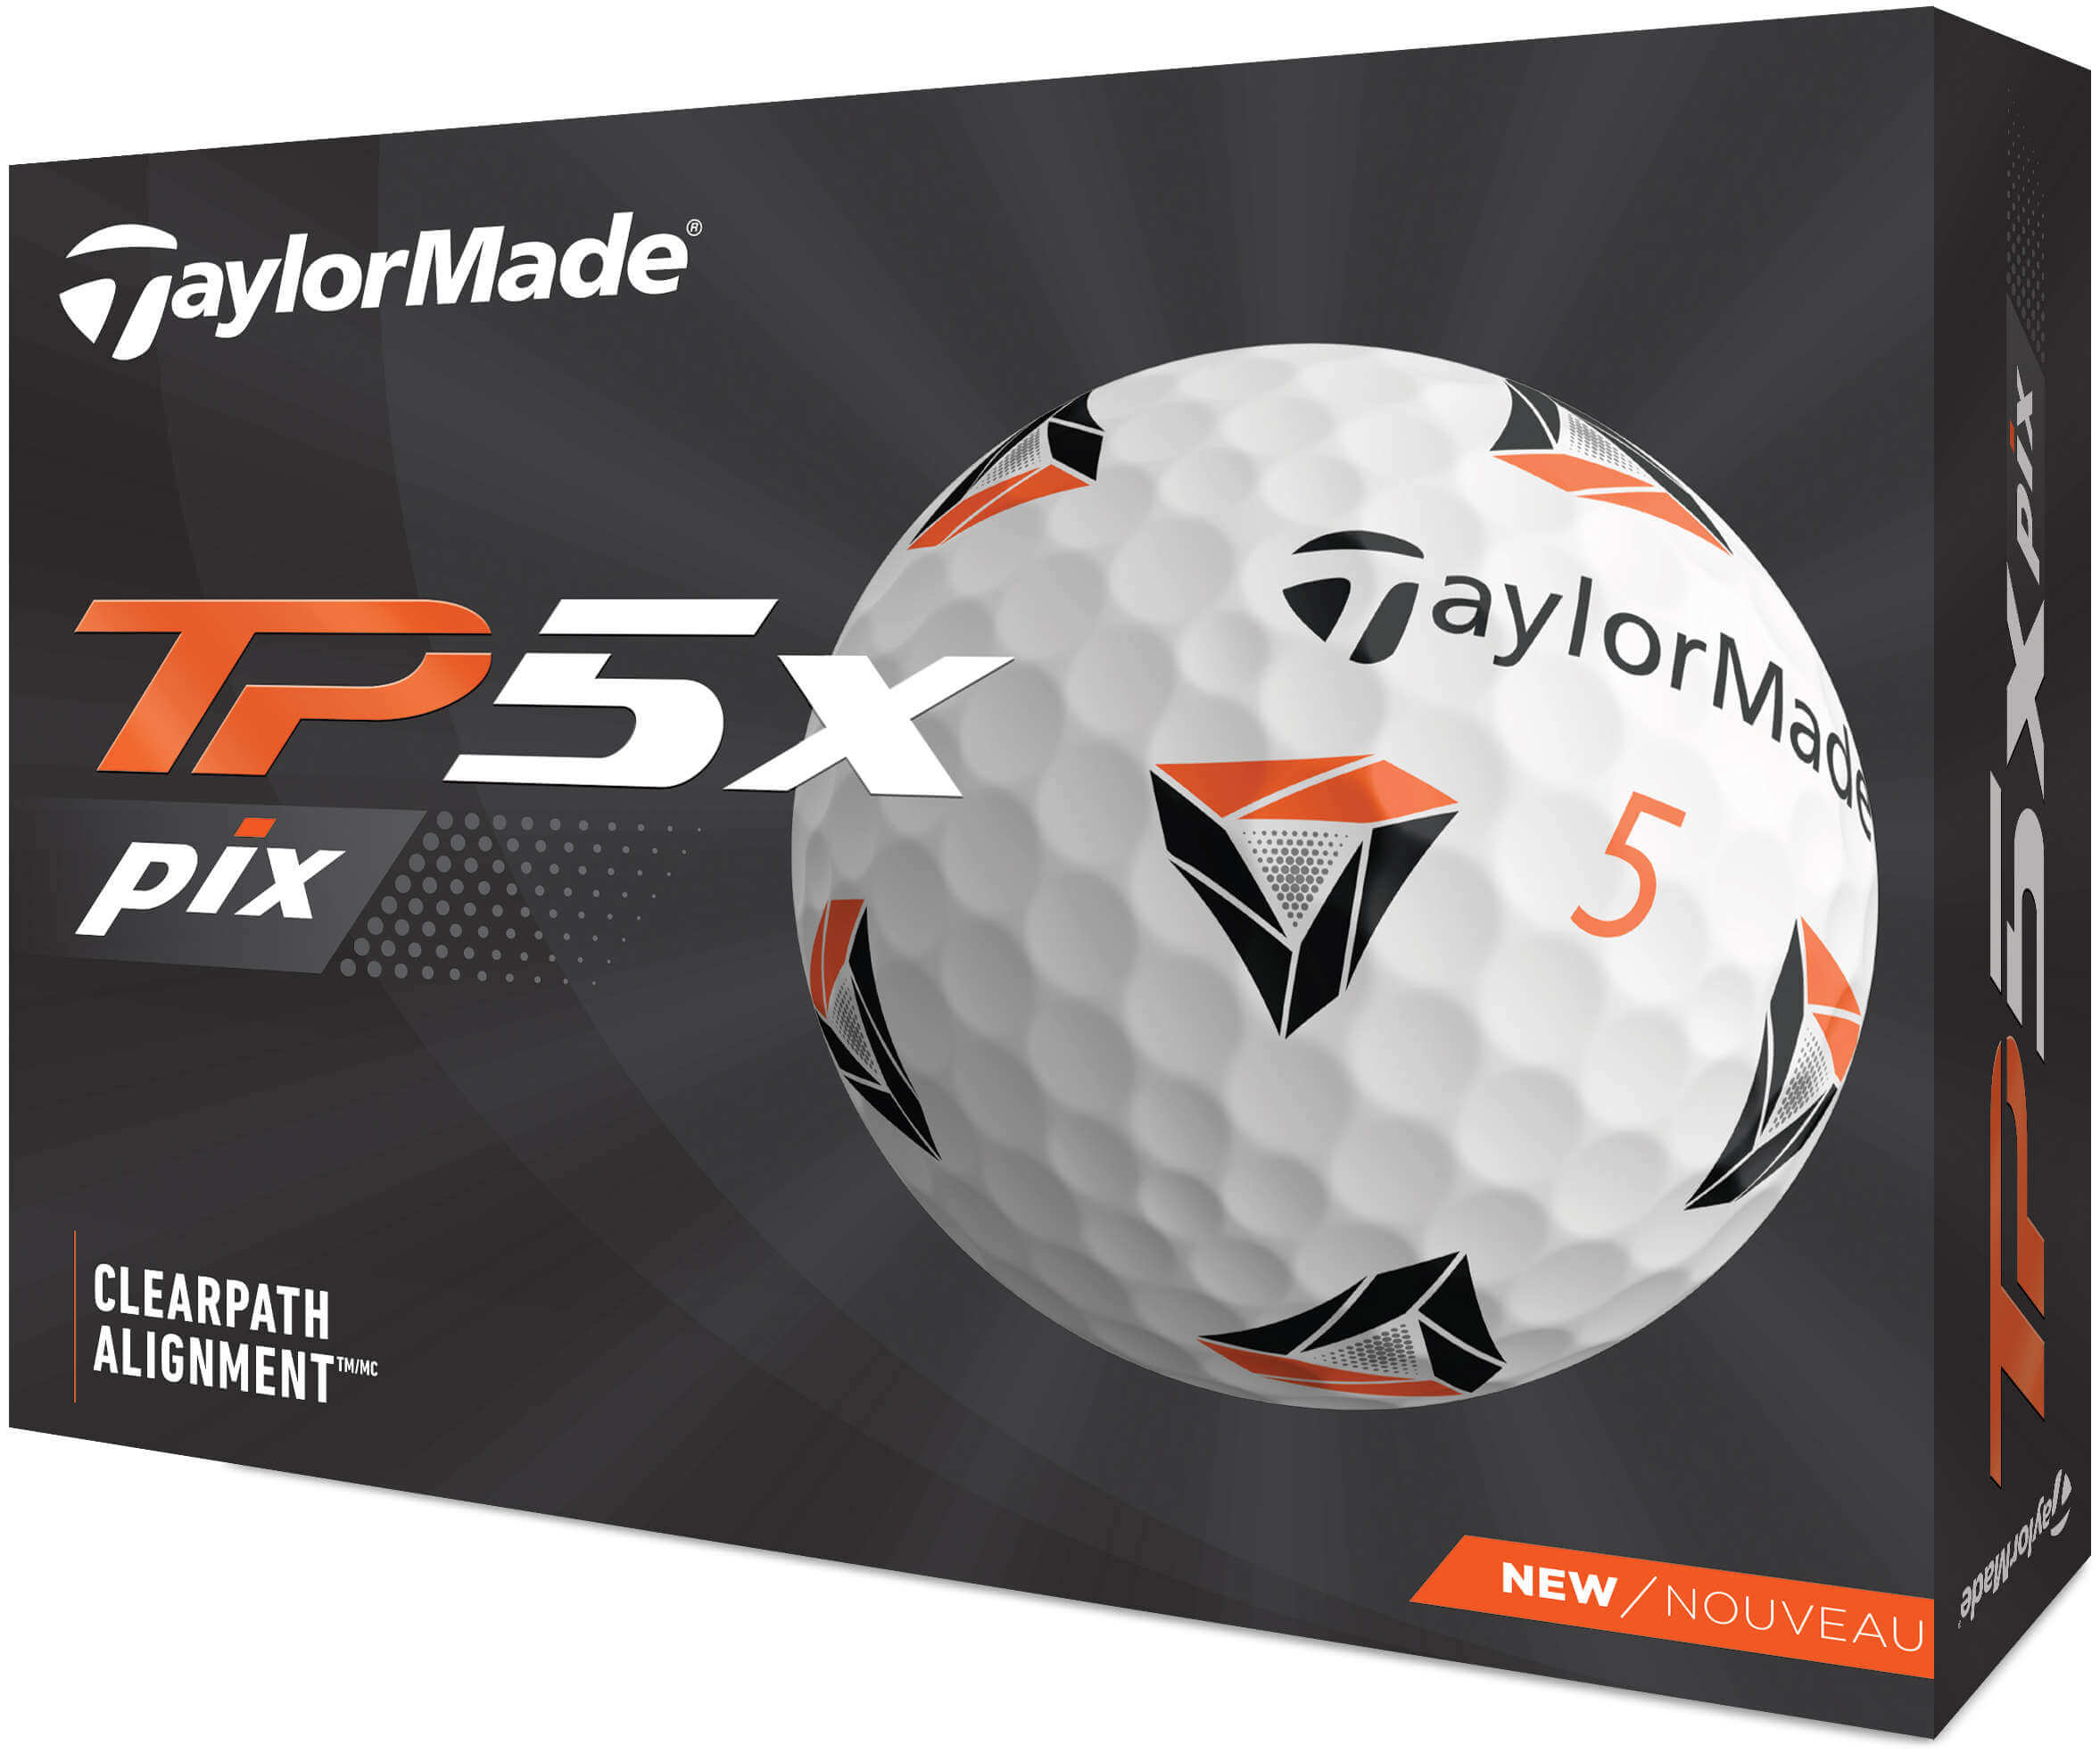 TaylorMade TP5x pix Golfbälle, white